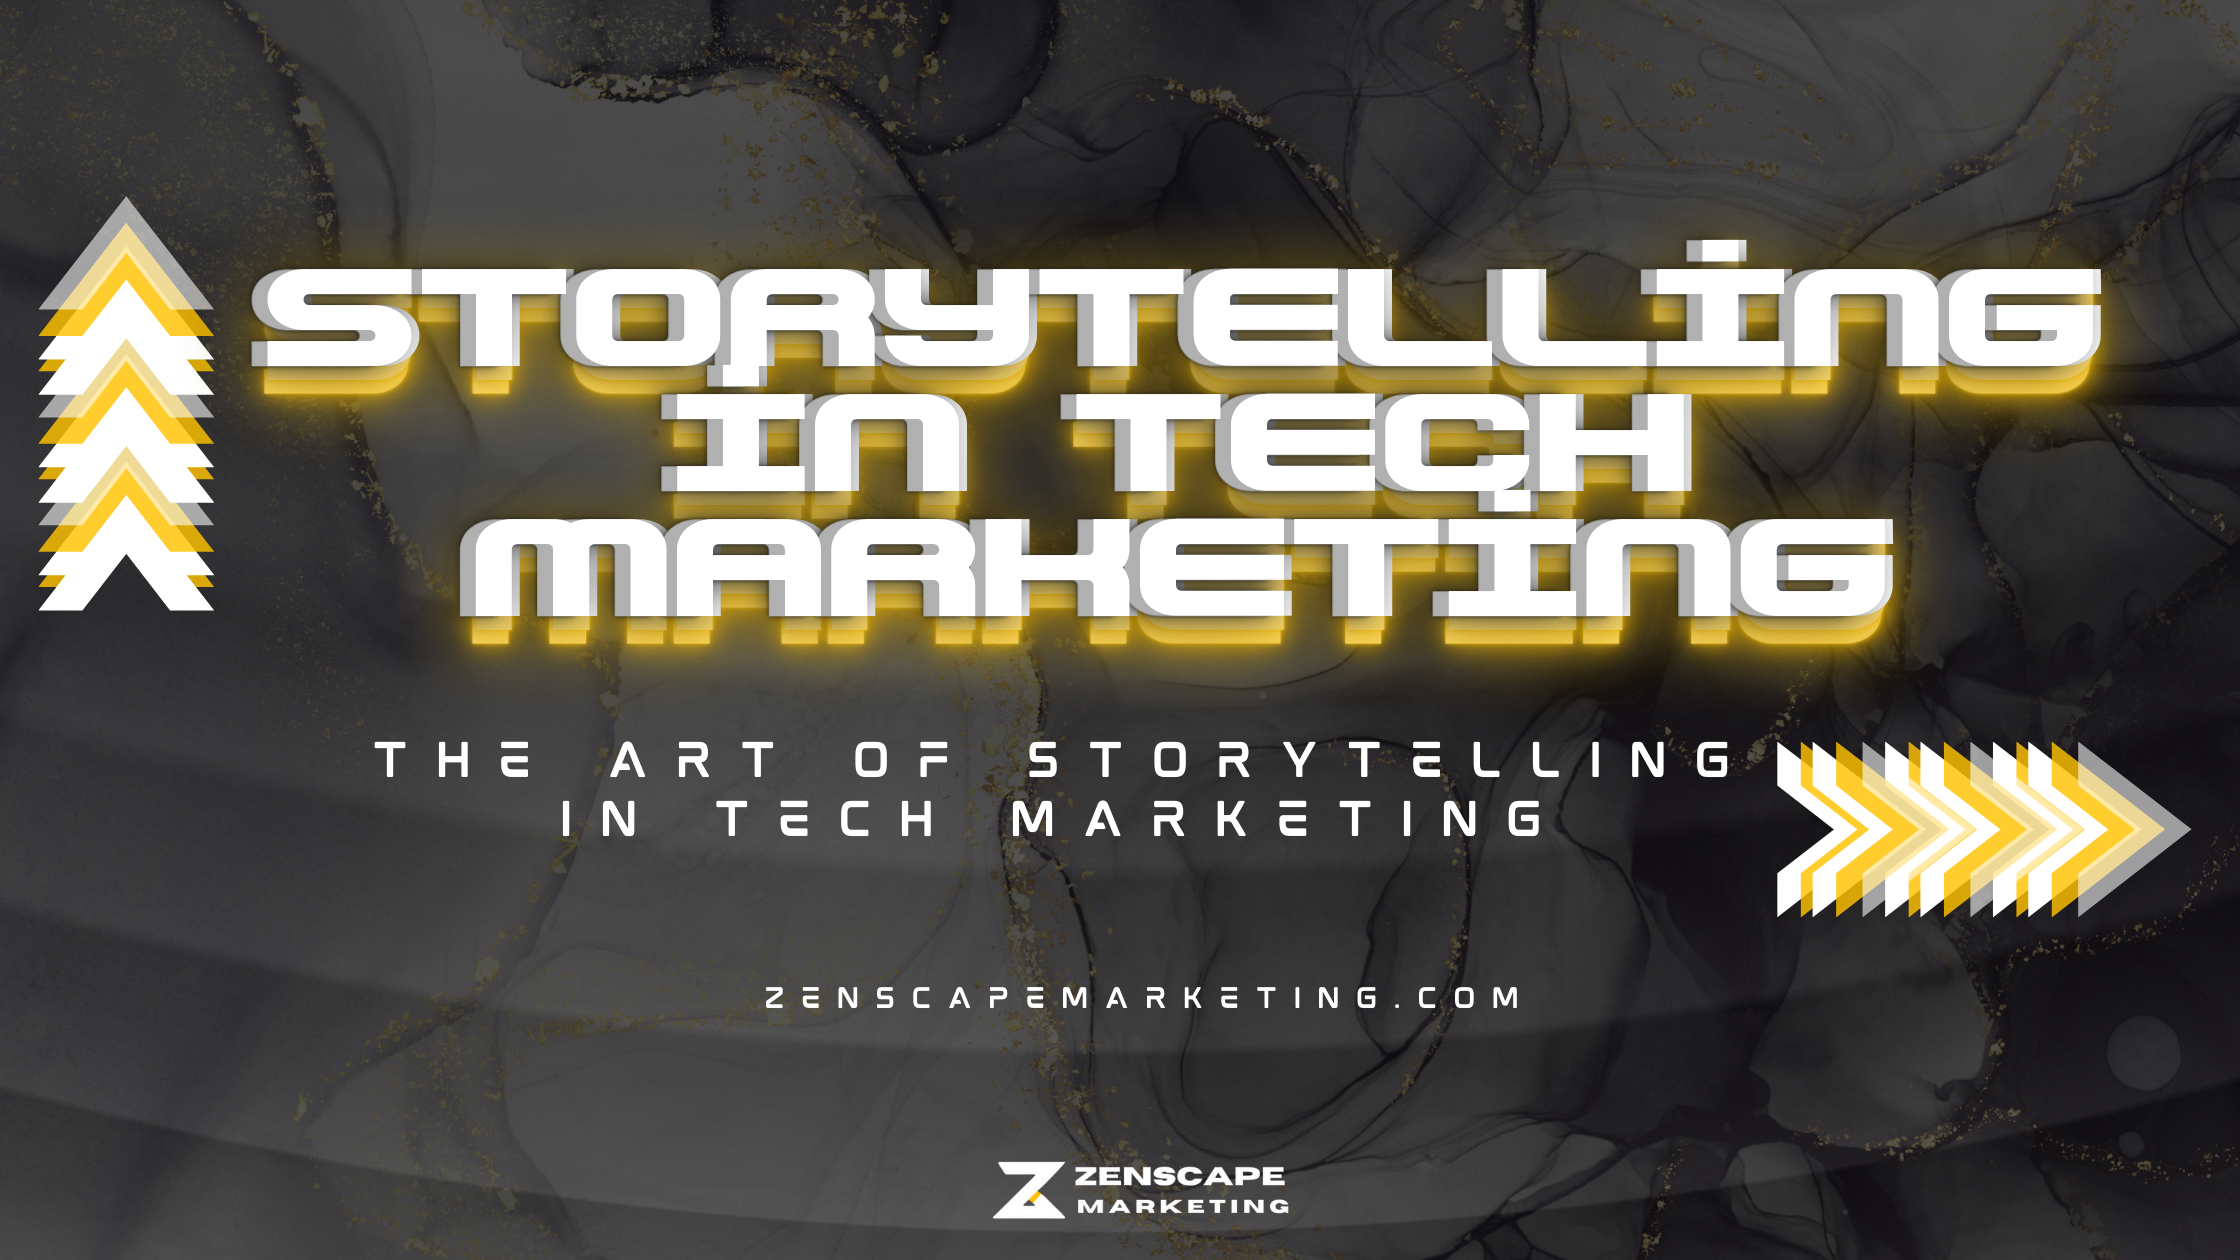 Storytelling in Tech Marketing